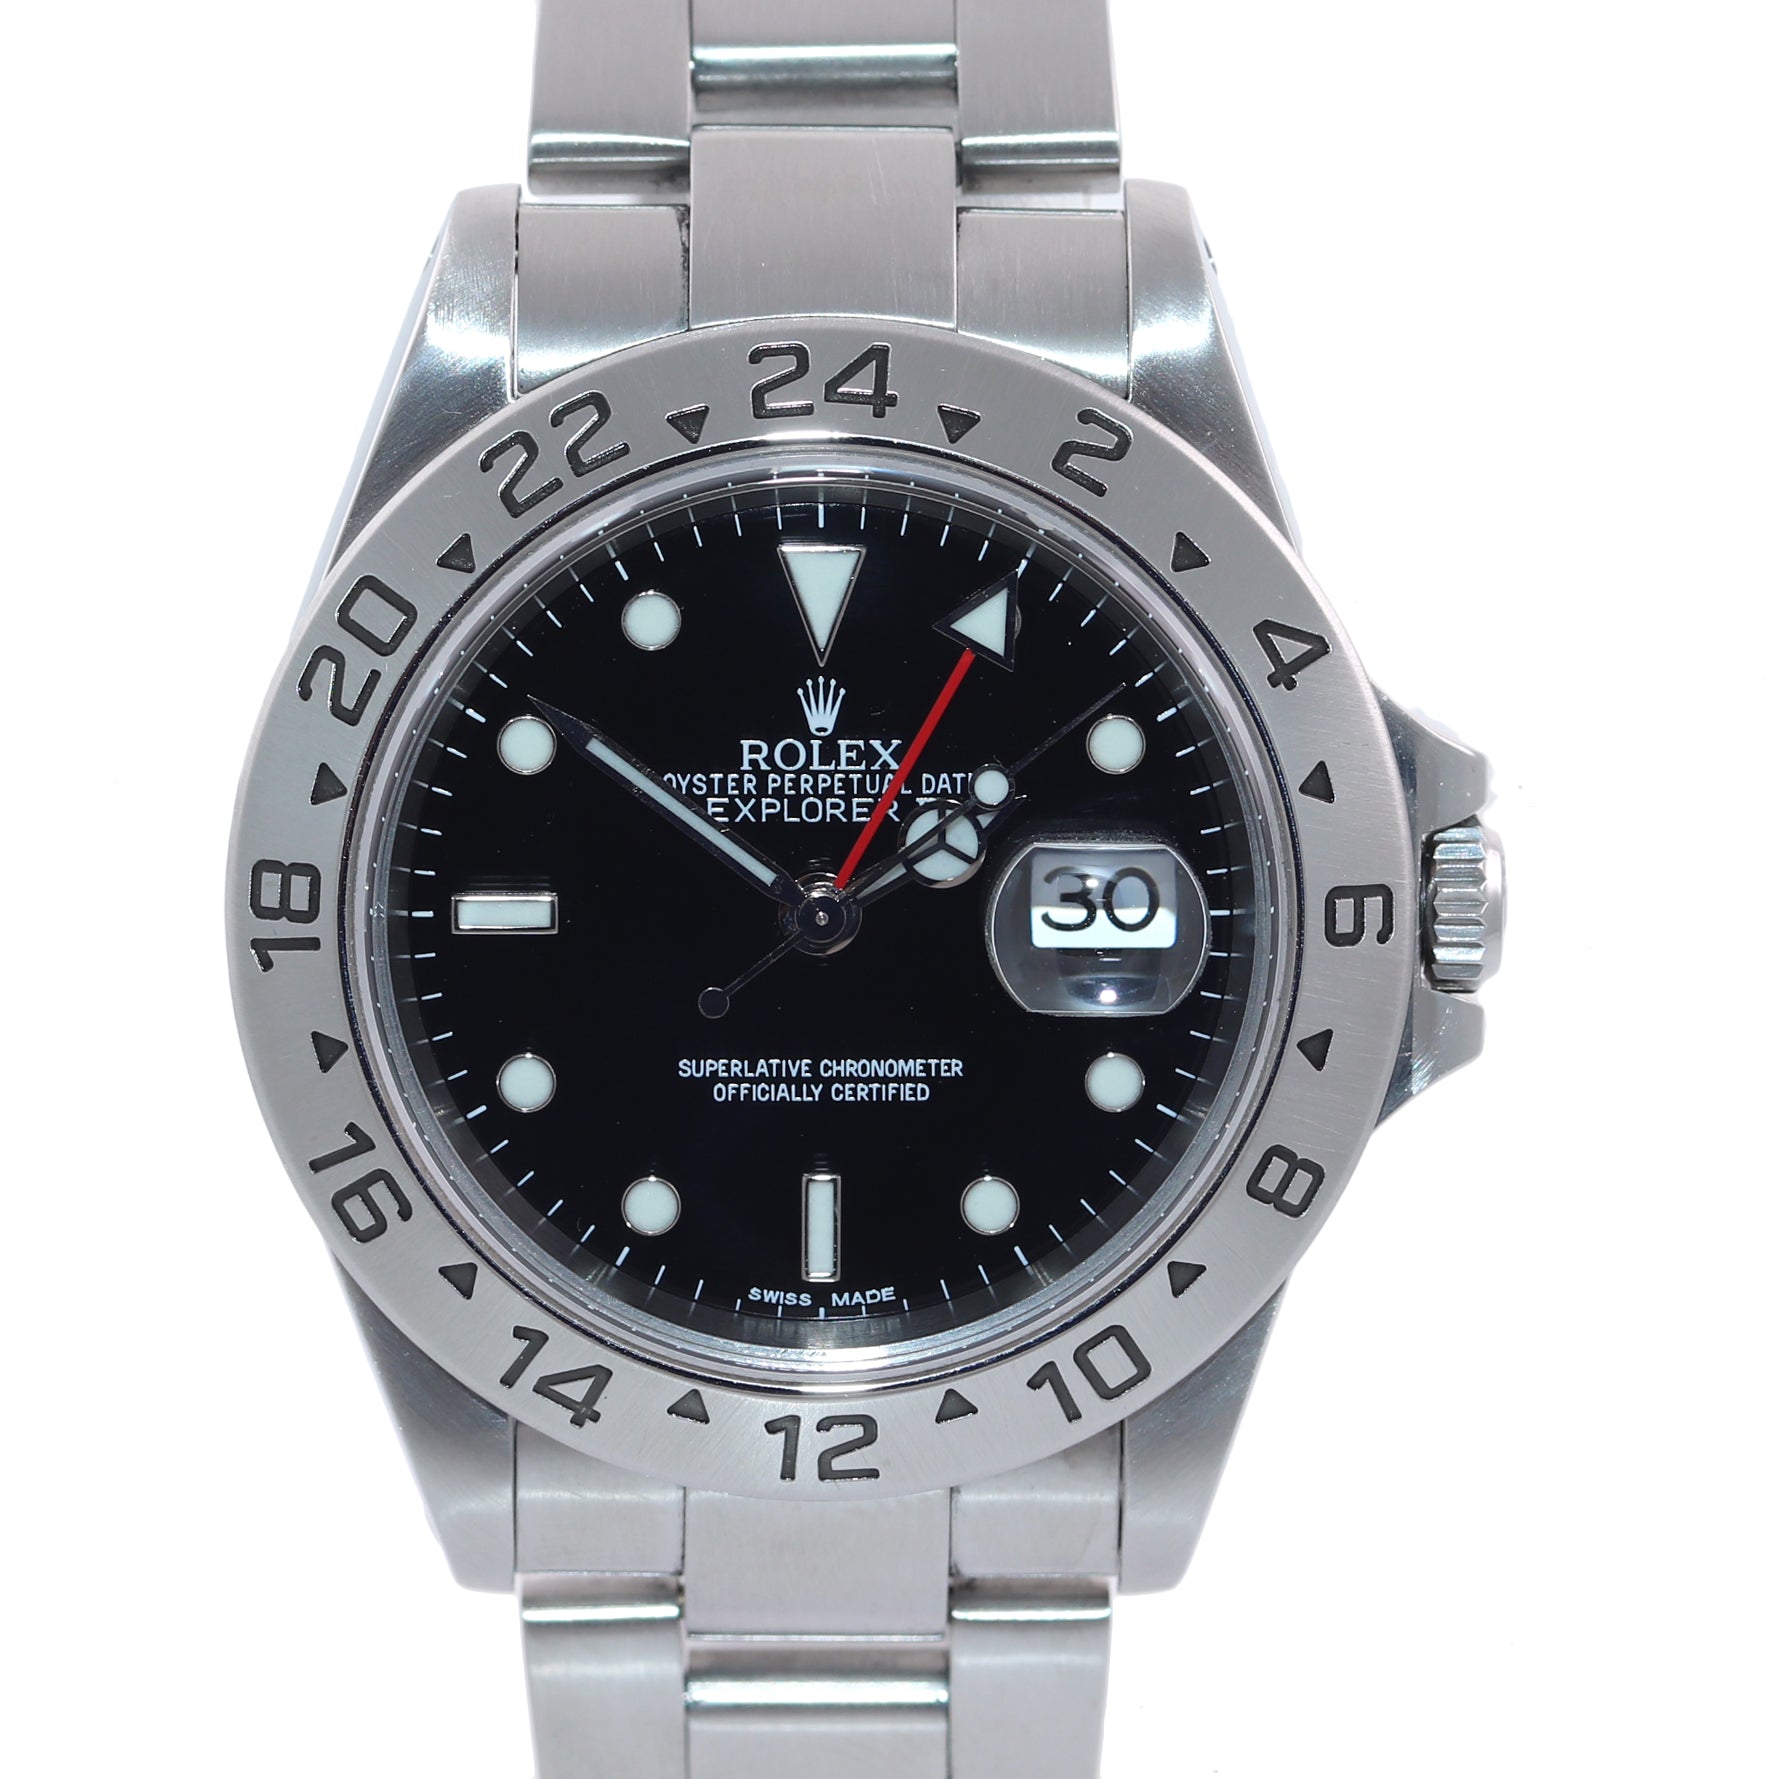 MINT 2001 Rolex Explorer II 16570 Black Date GMT 40mm Watch Box